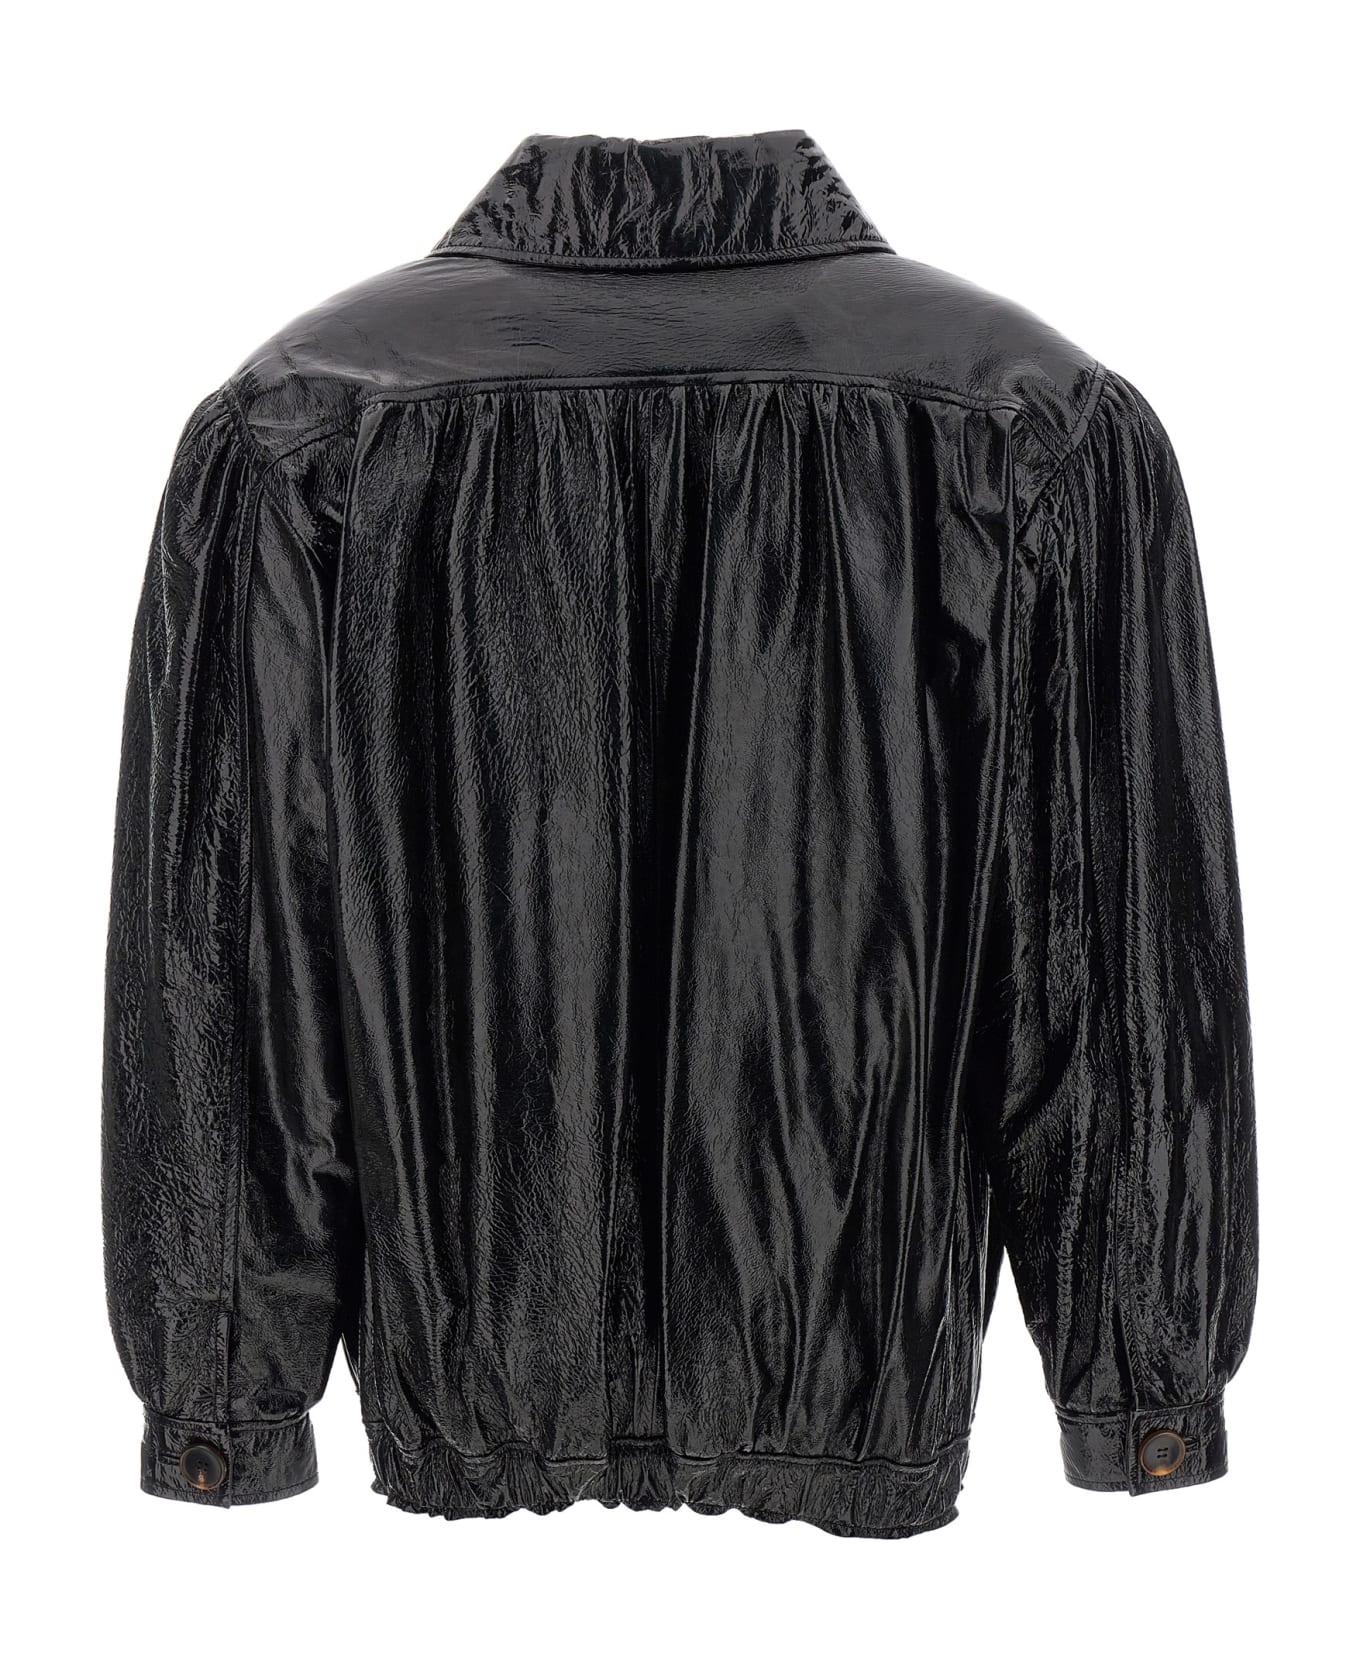 Alessandra Rich Leather Bomber Jacket - Black   ジャケット